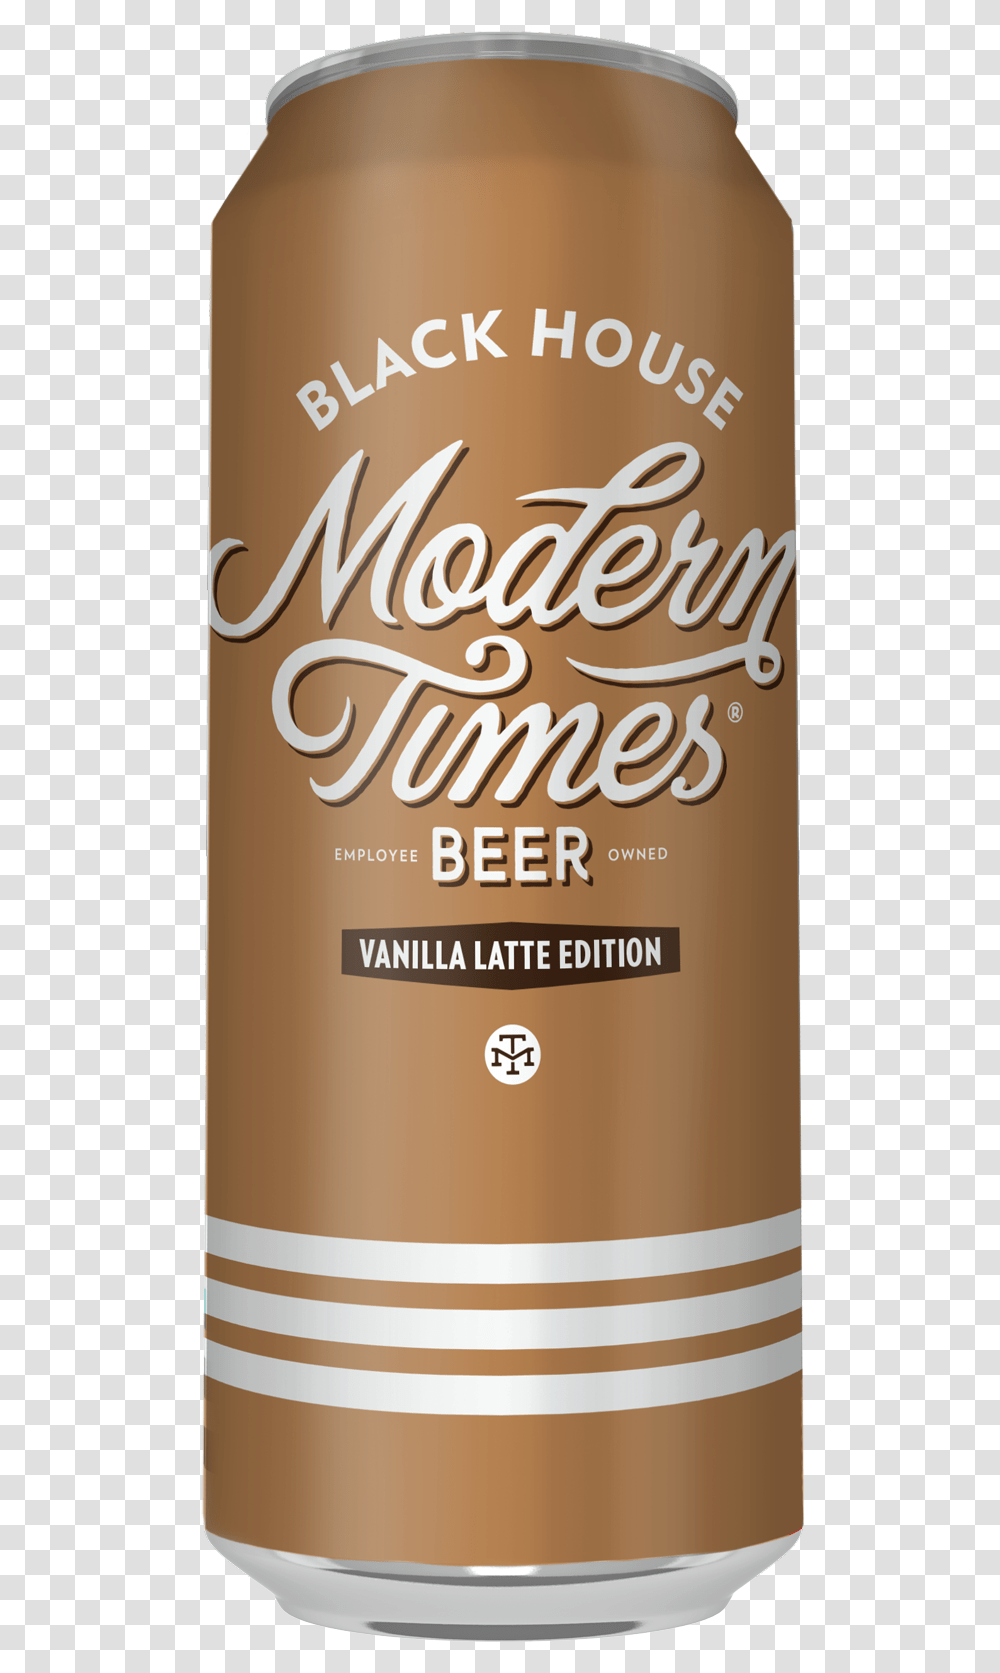 Black House Vanilla Latte Can Guinness, Tin, Bottle, Beer Transparent Png